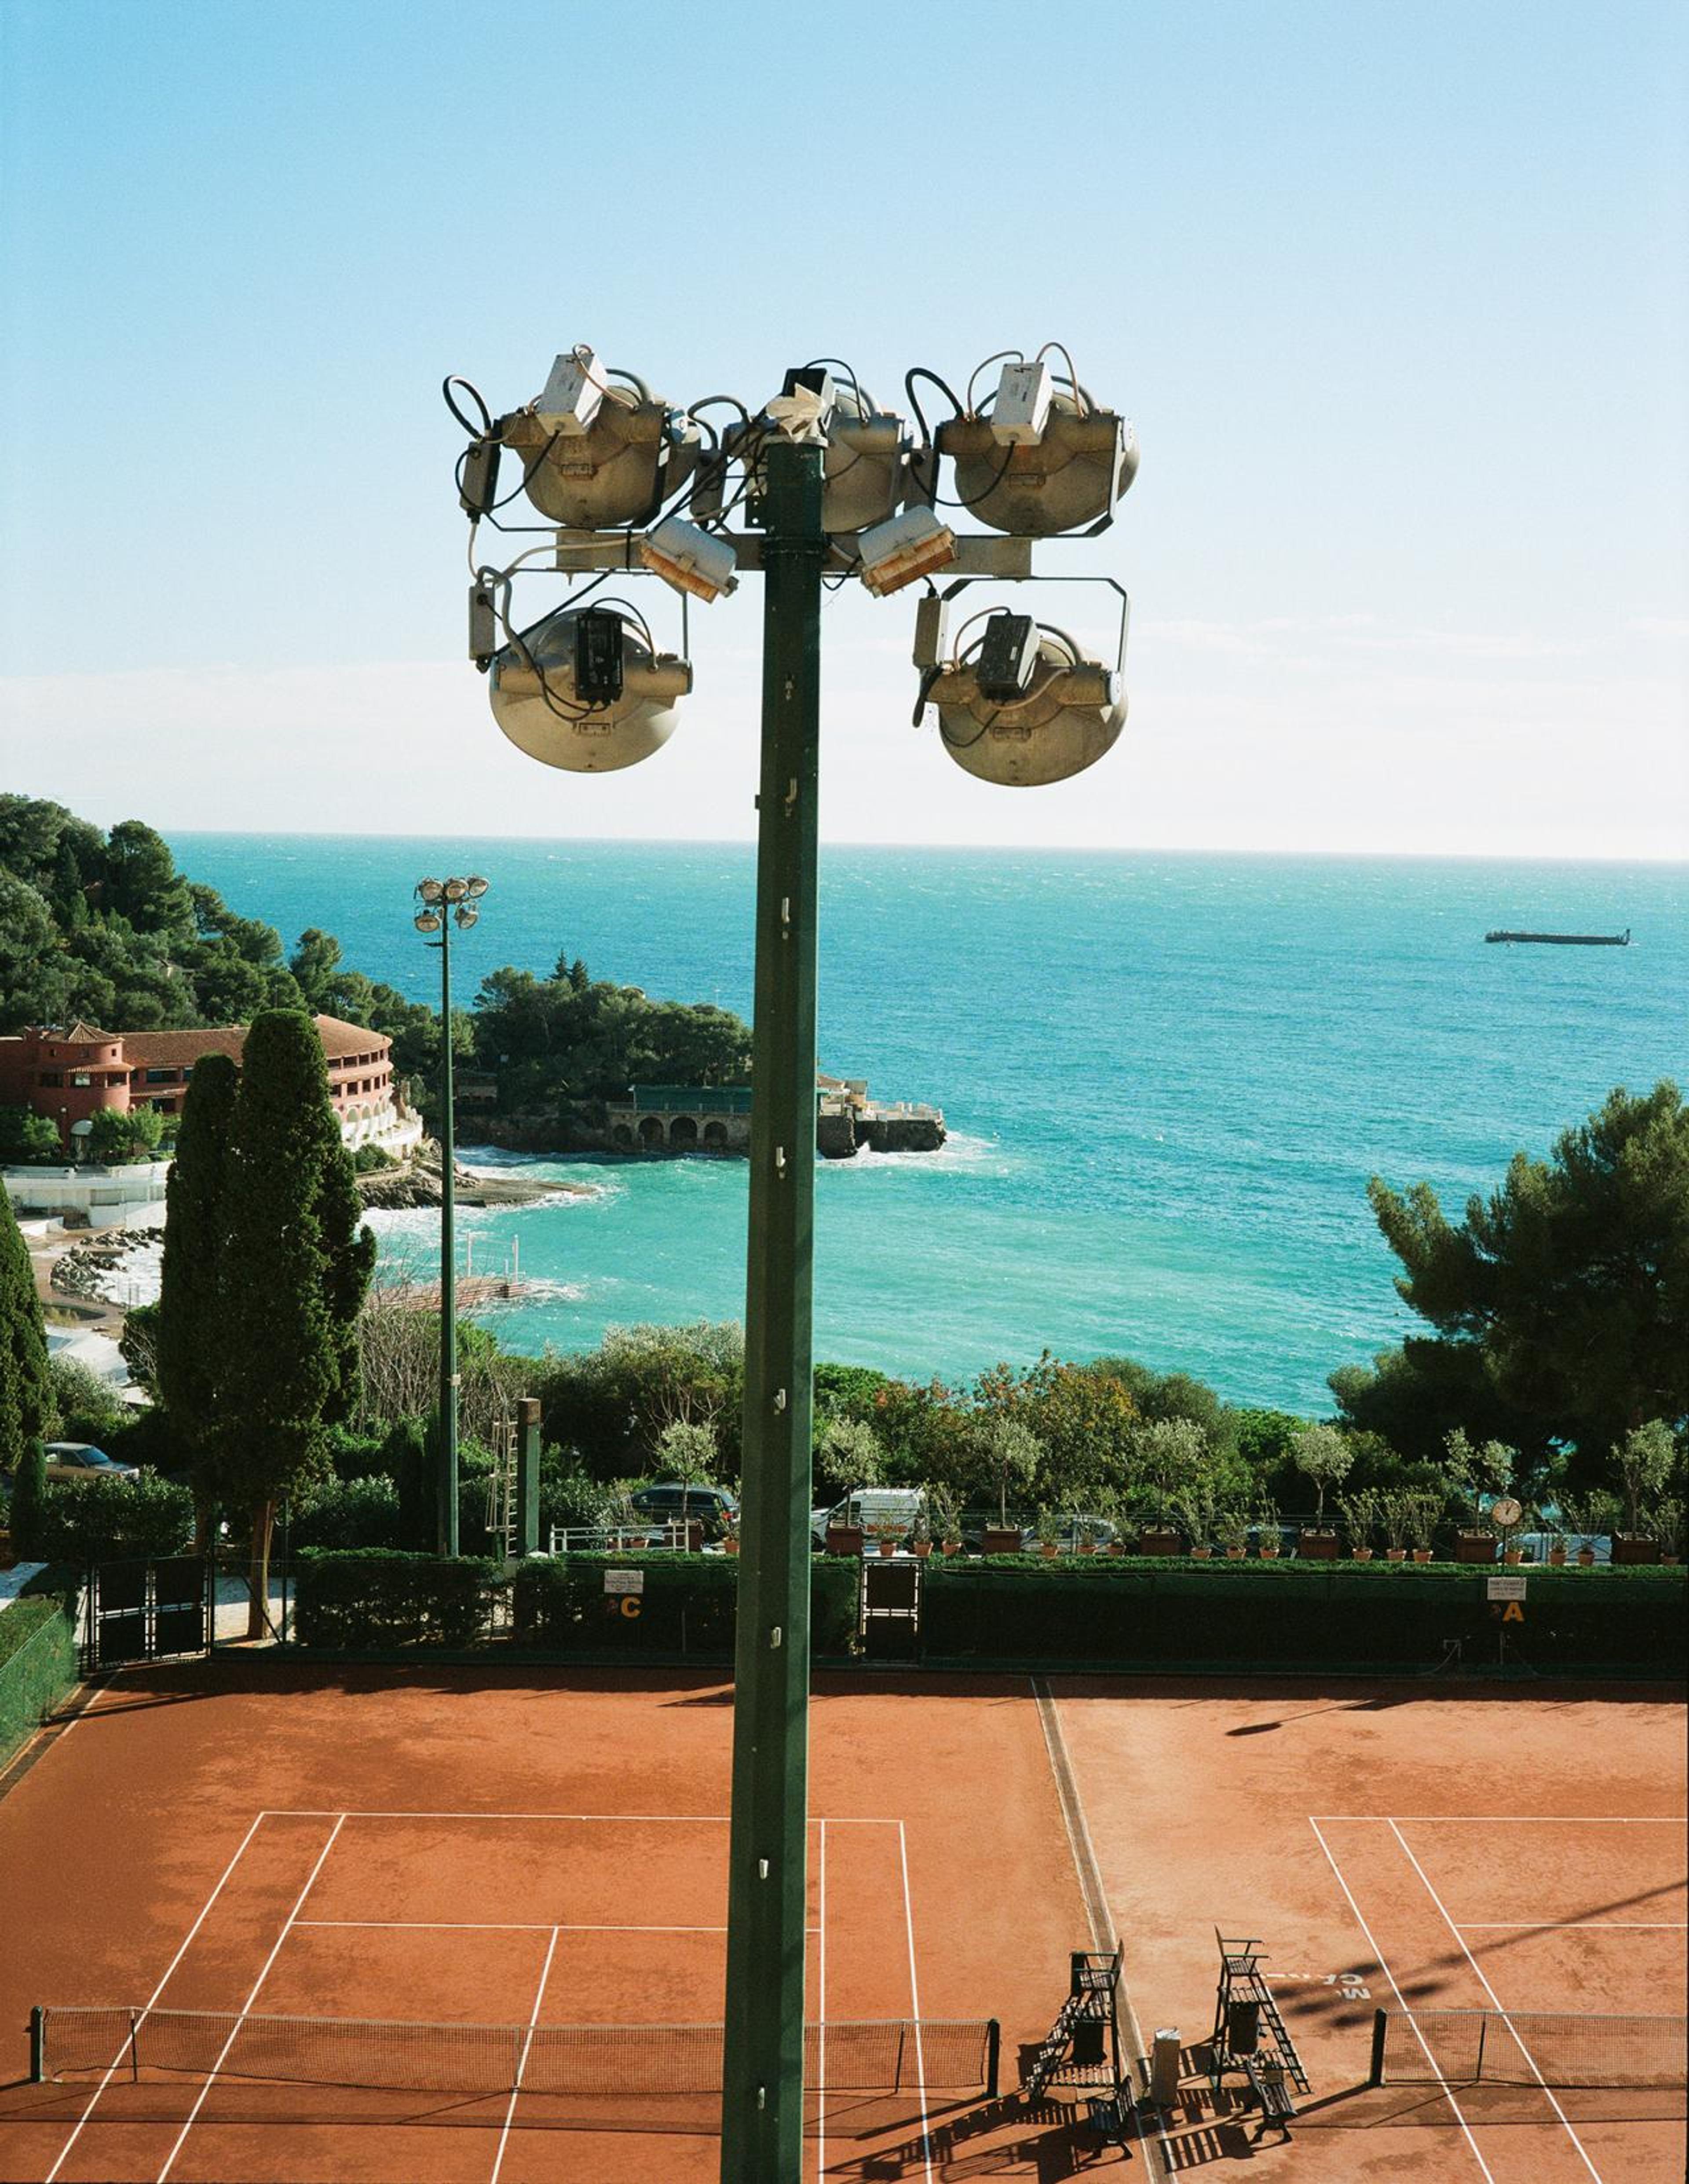 Monte Carlo Country Club, Monaco, 2019